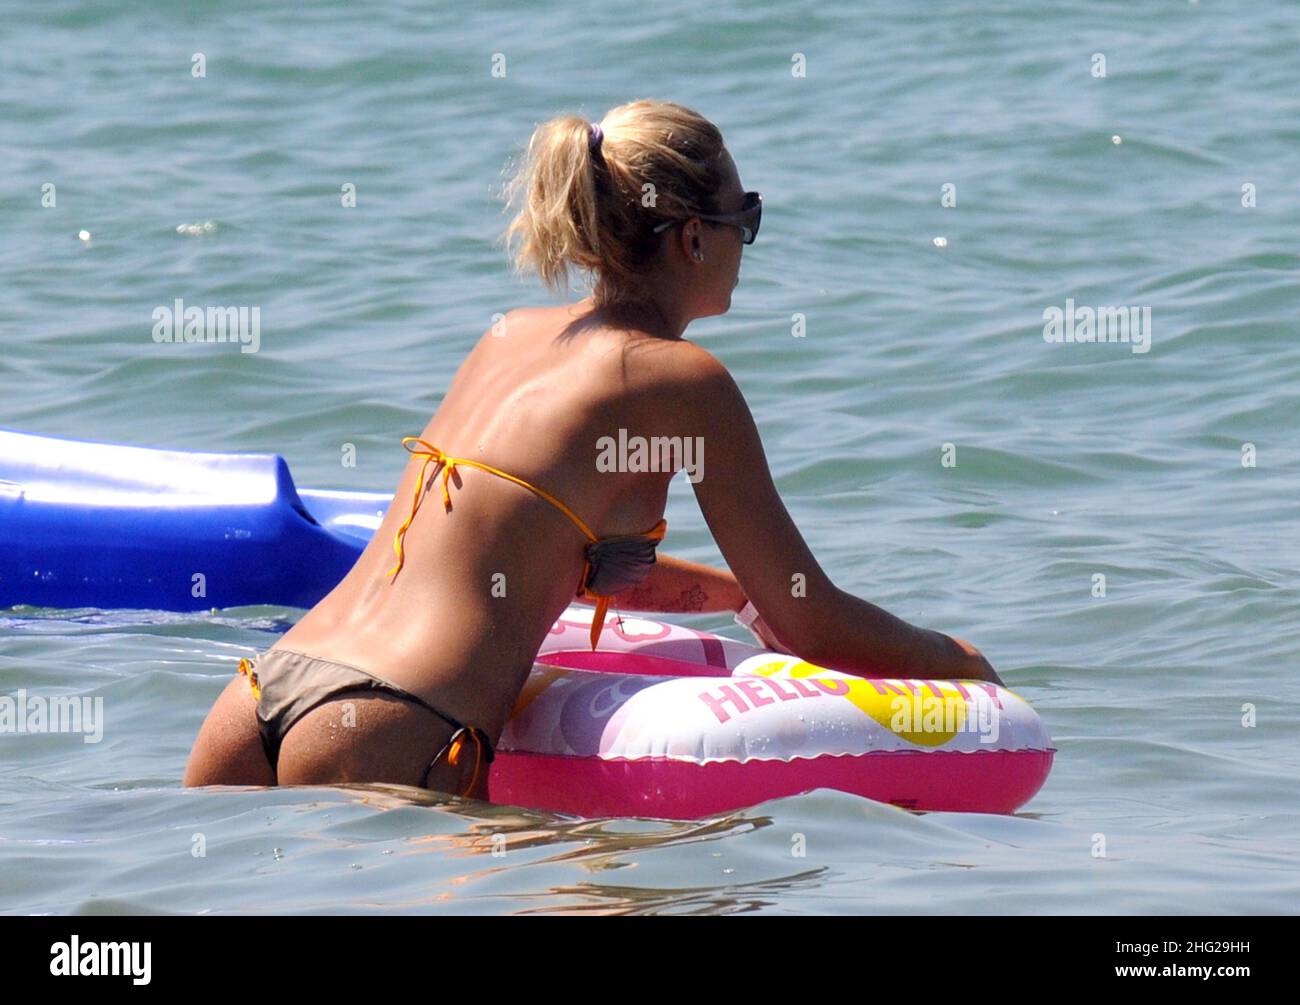 Ilary blasi bikini hi-res stock photography and images - Alamy